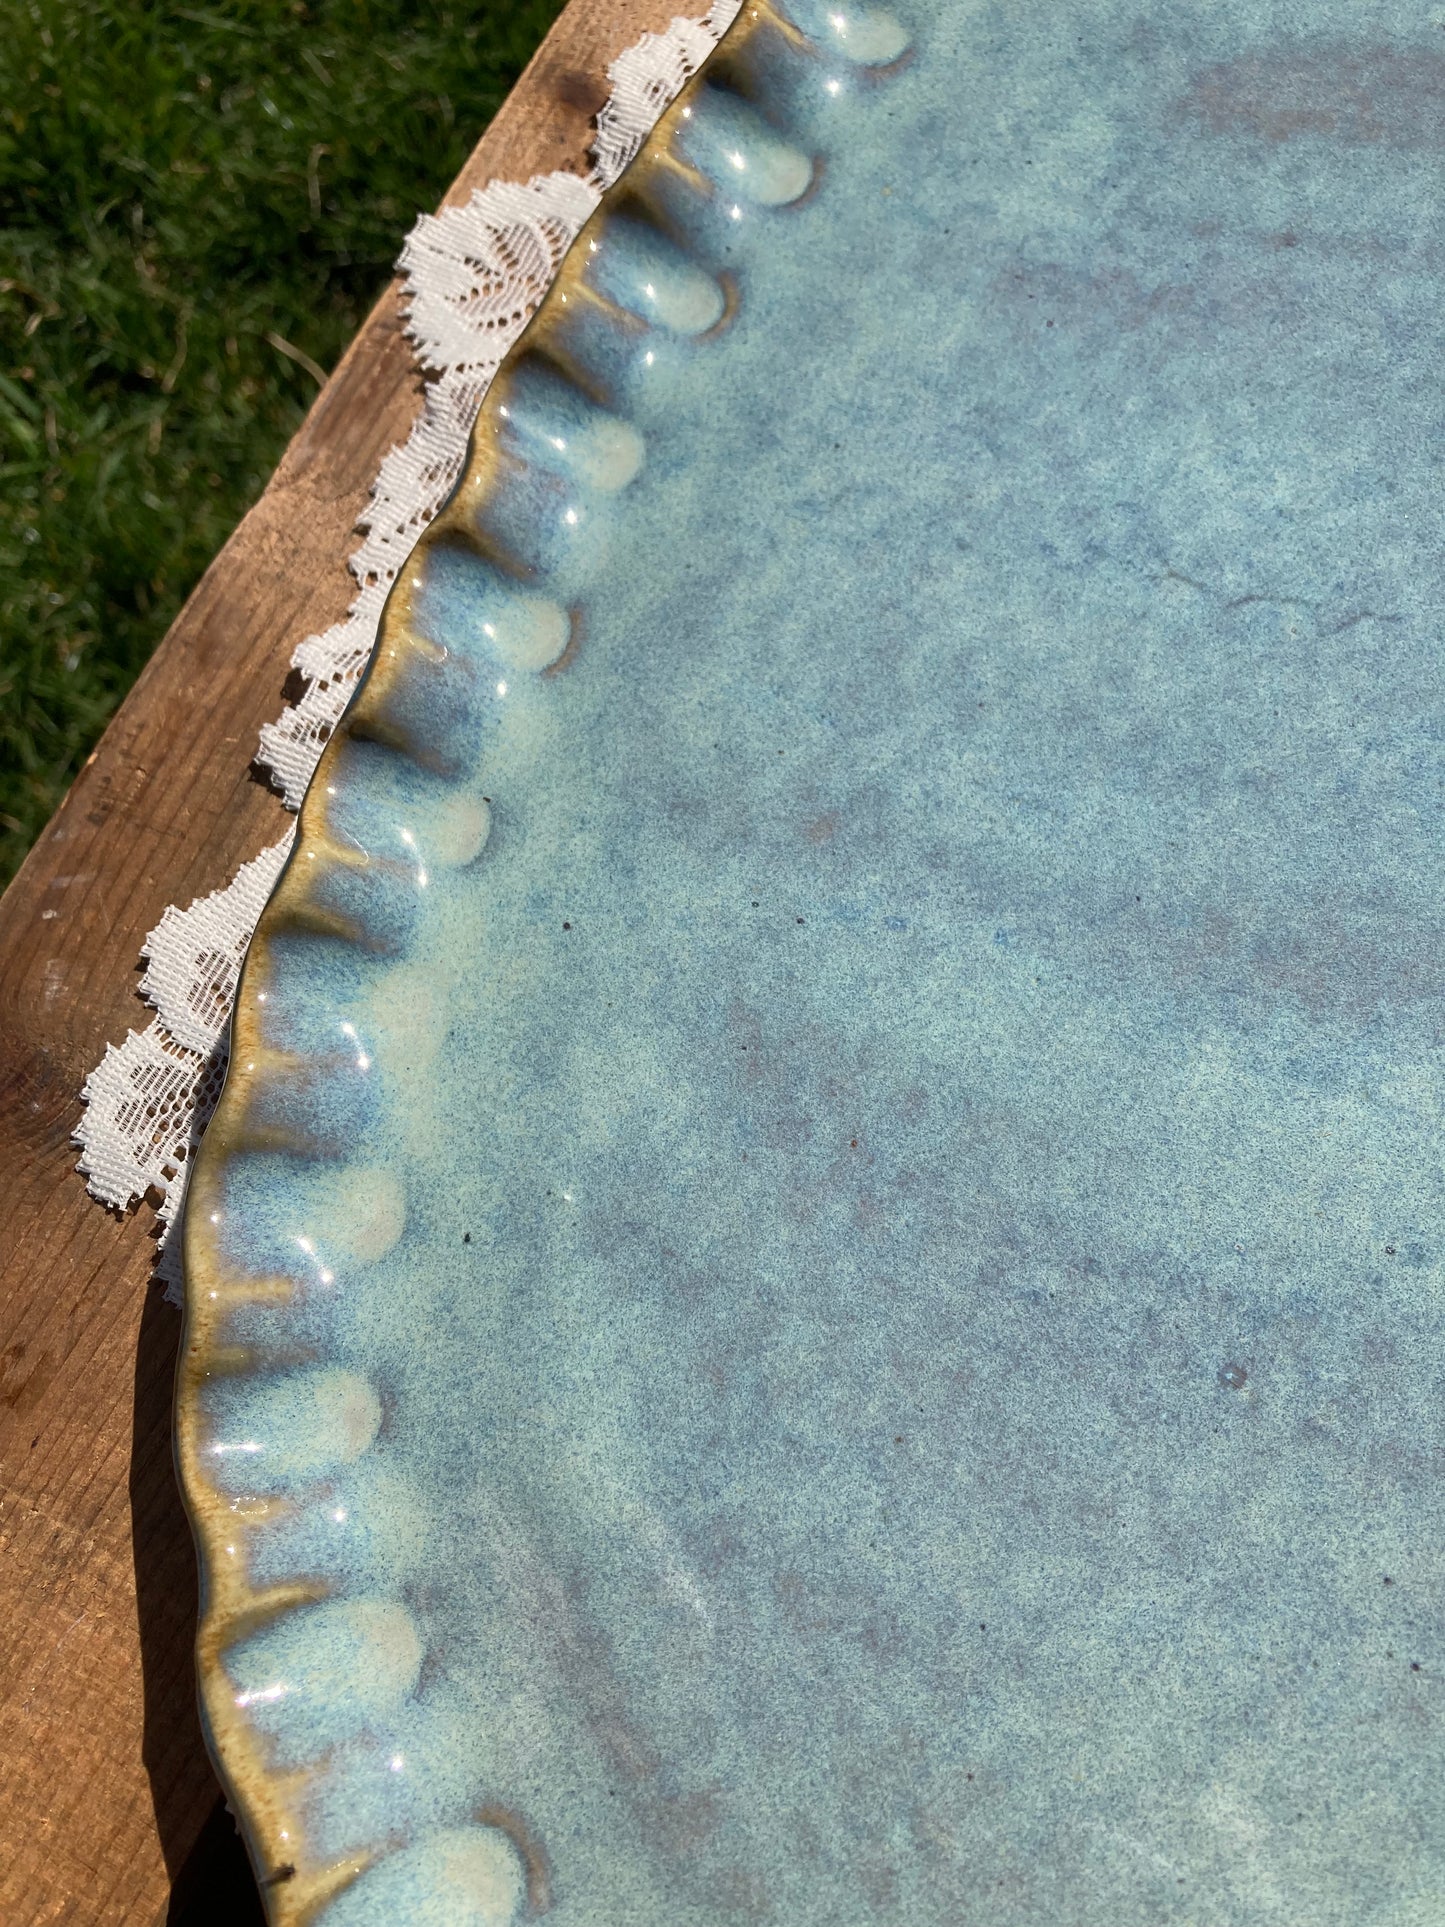 Turquoise/Blue Serving Platter